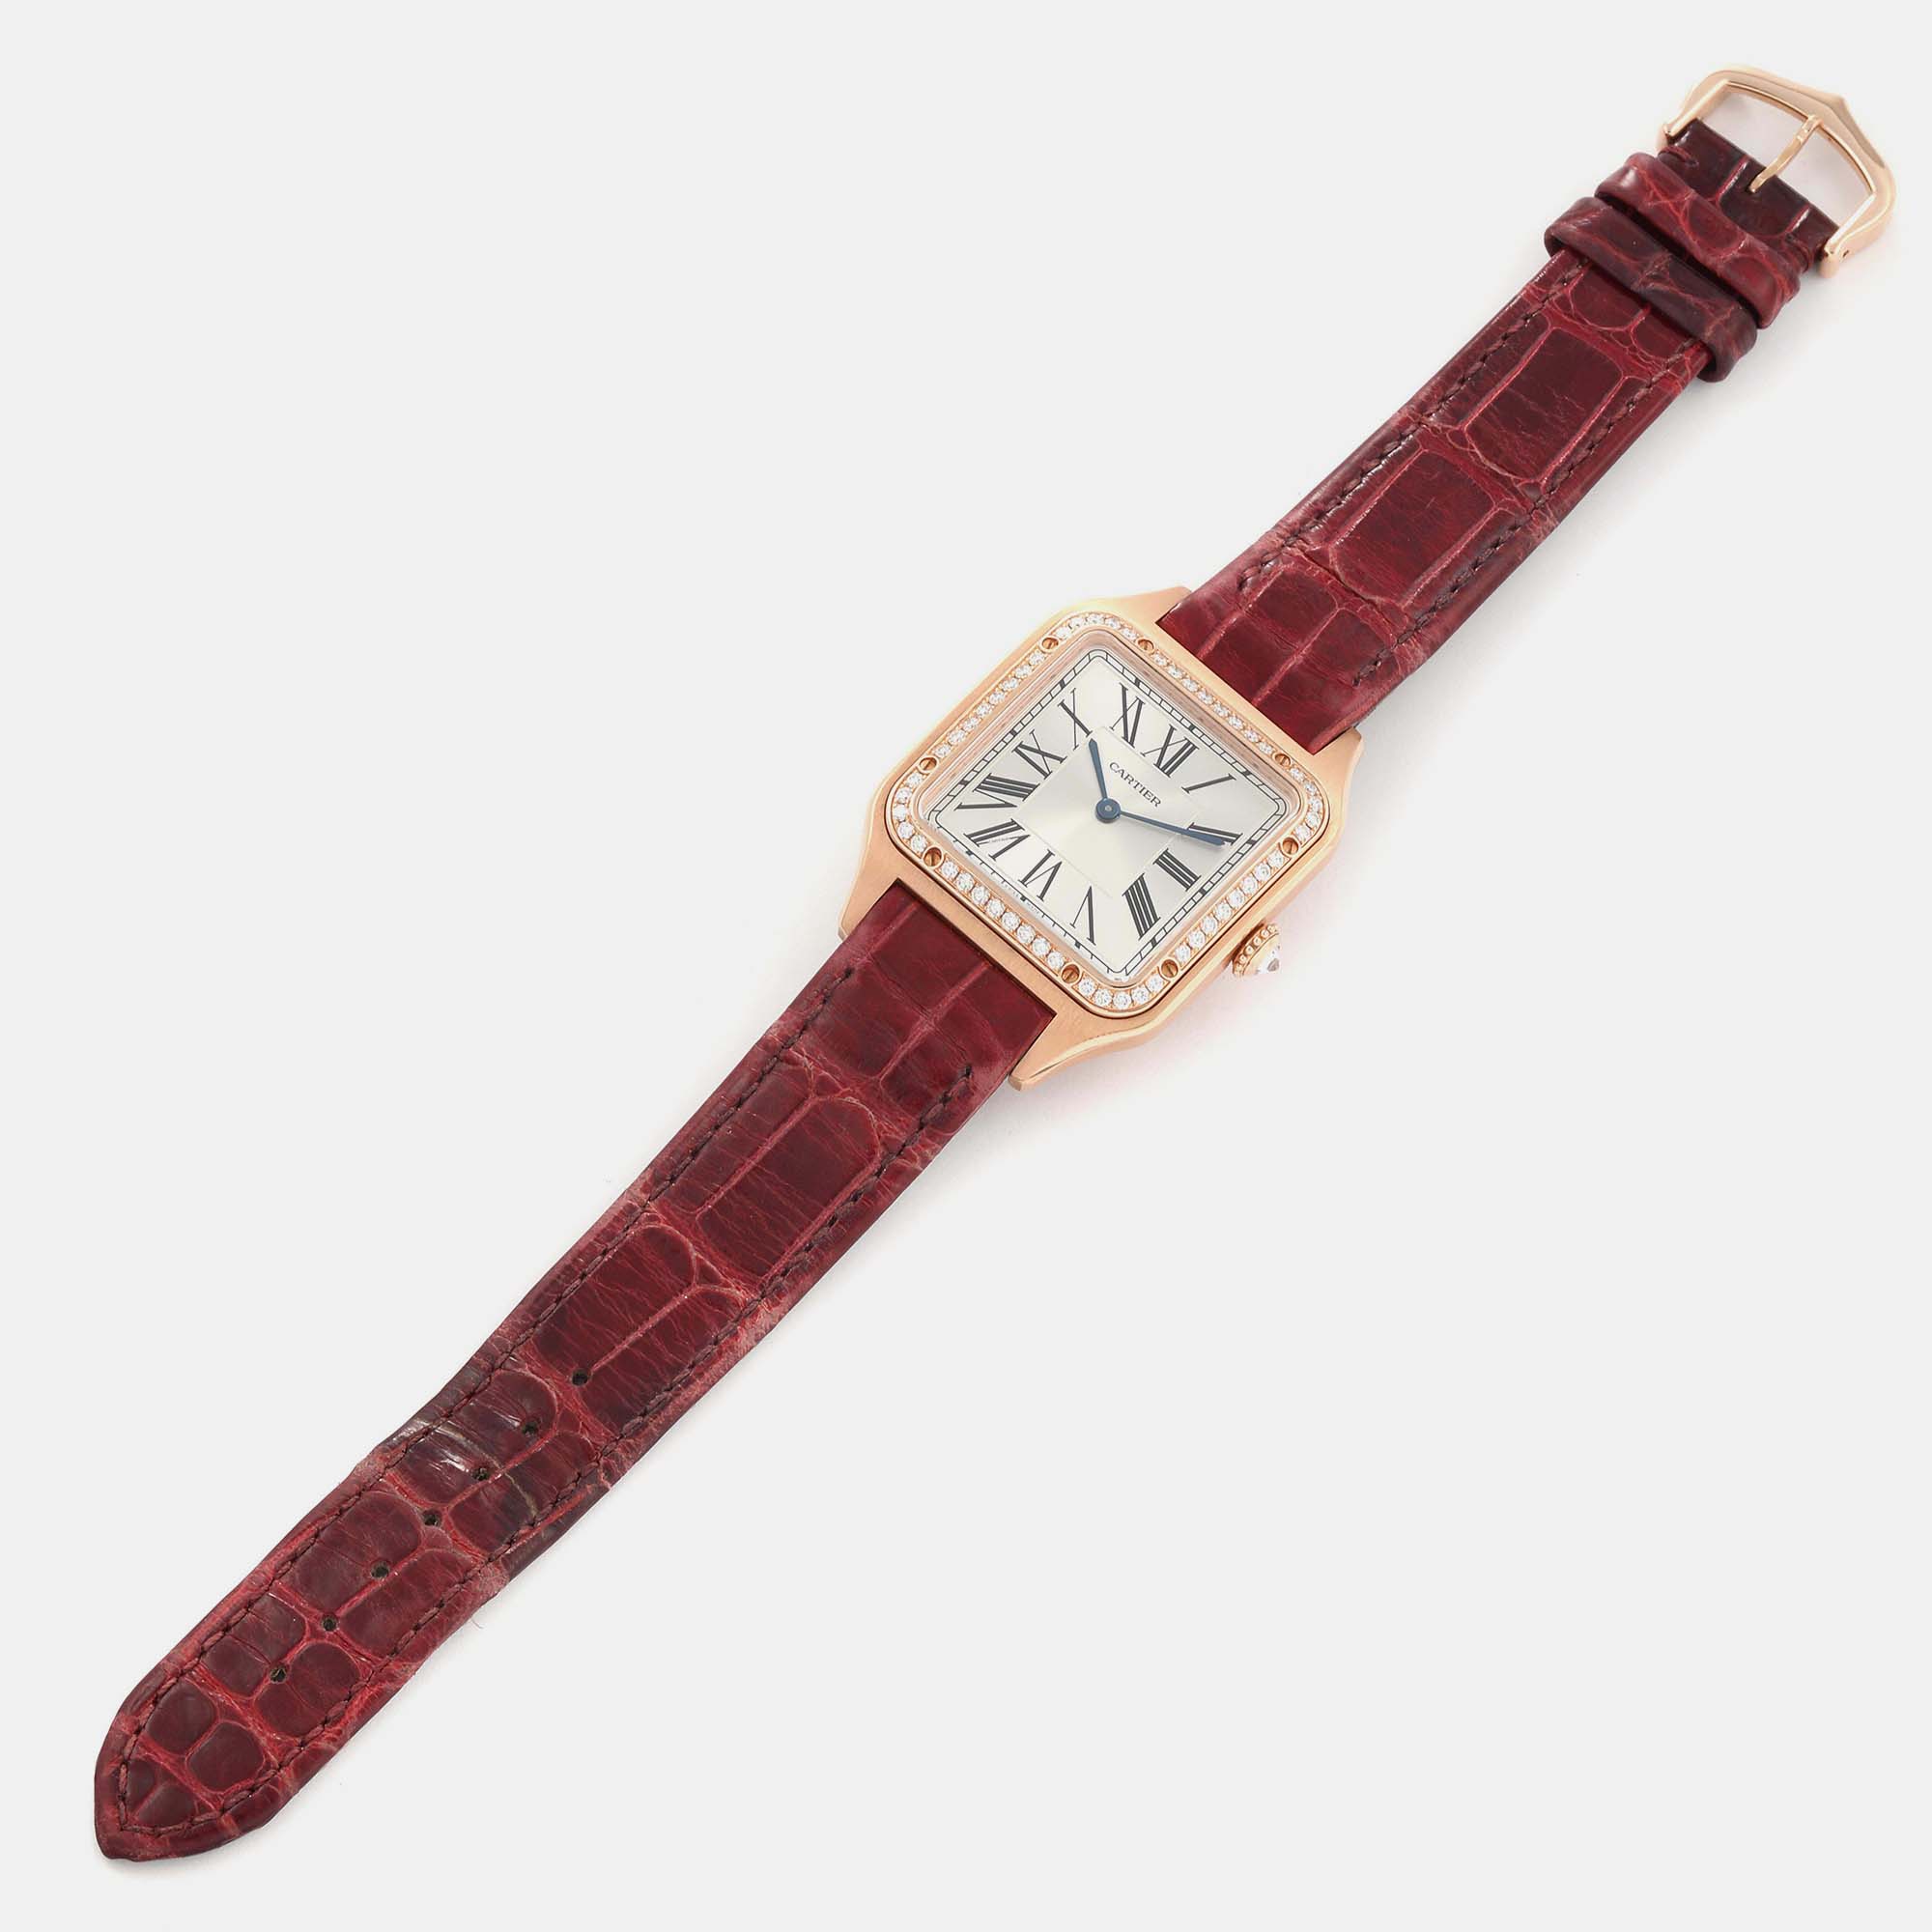 Cartier Santos Dumont Diamond Bezel Rose Gold Ladies Watch WJSA0016 43.5 X 31.4 Mm